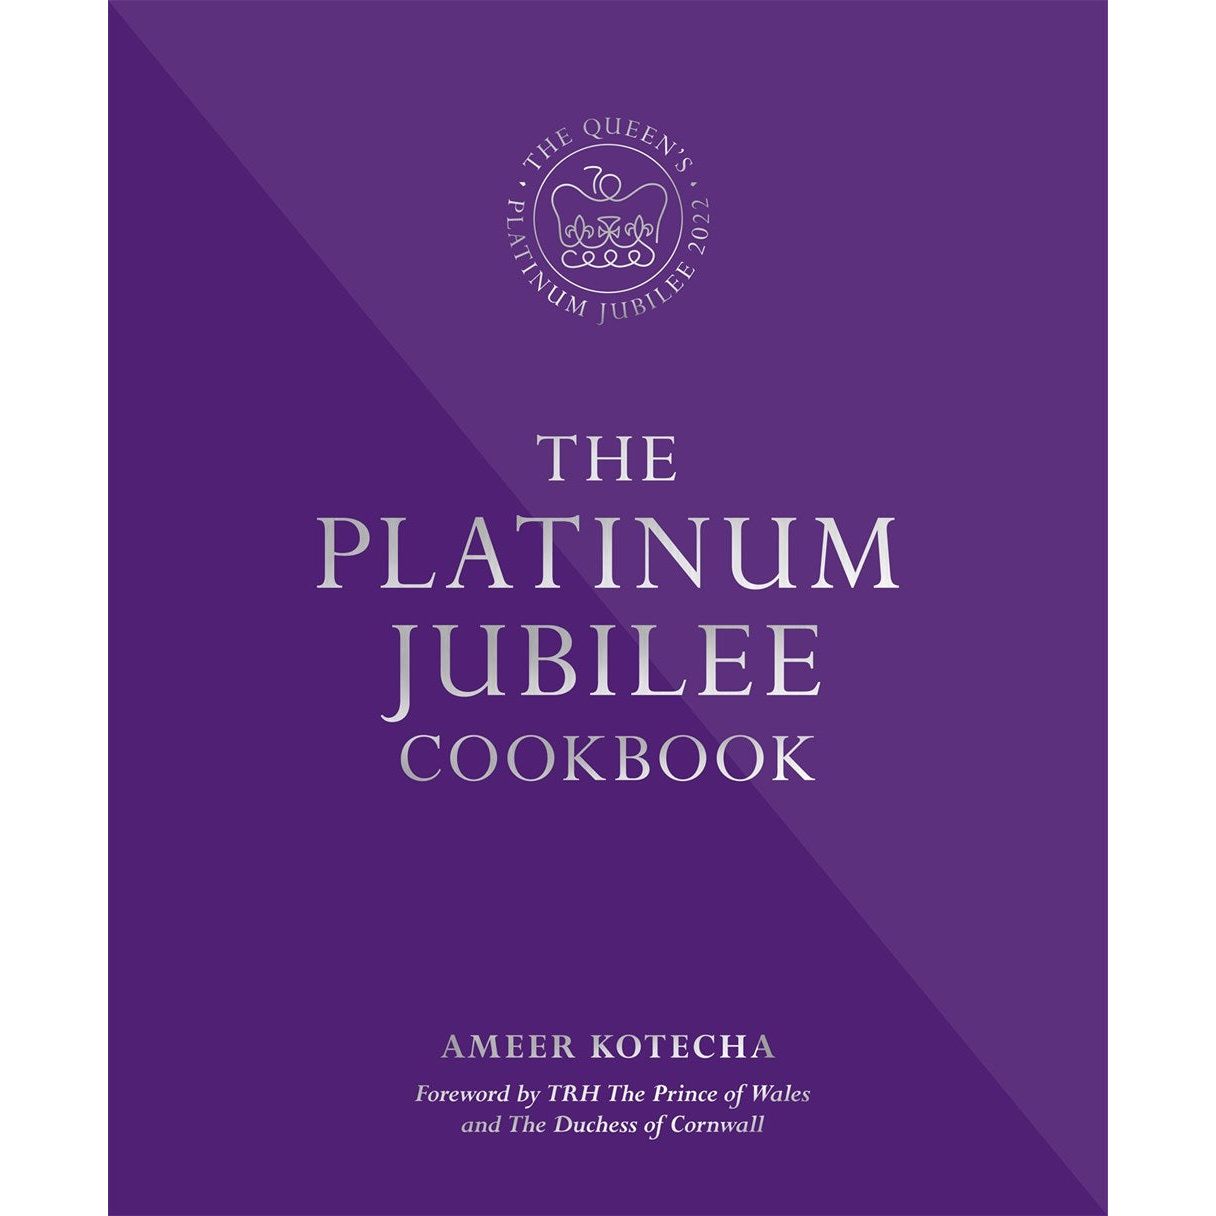 The Platinum Jubilee Cookbook (Ameer Kotecha)